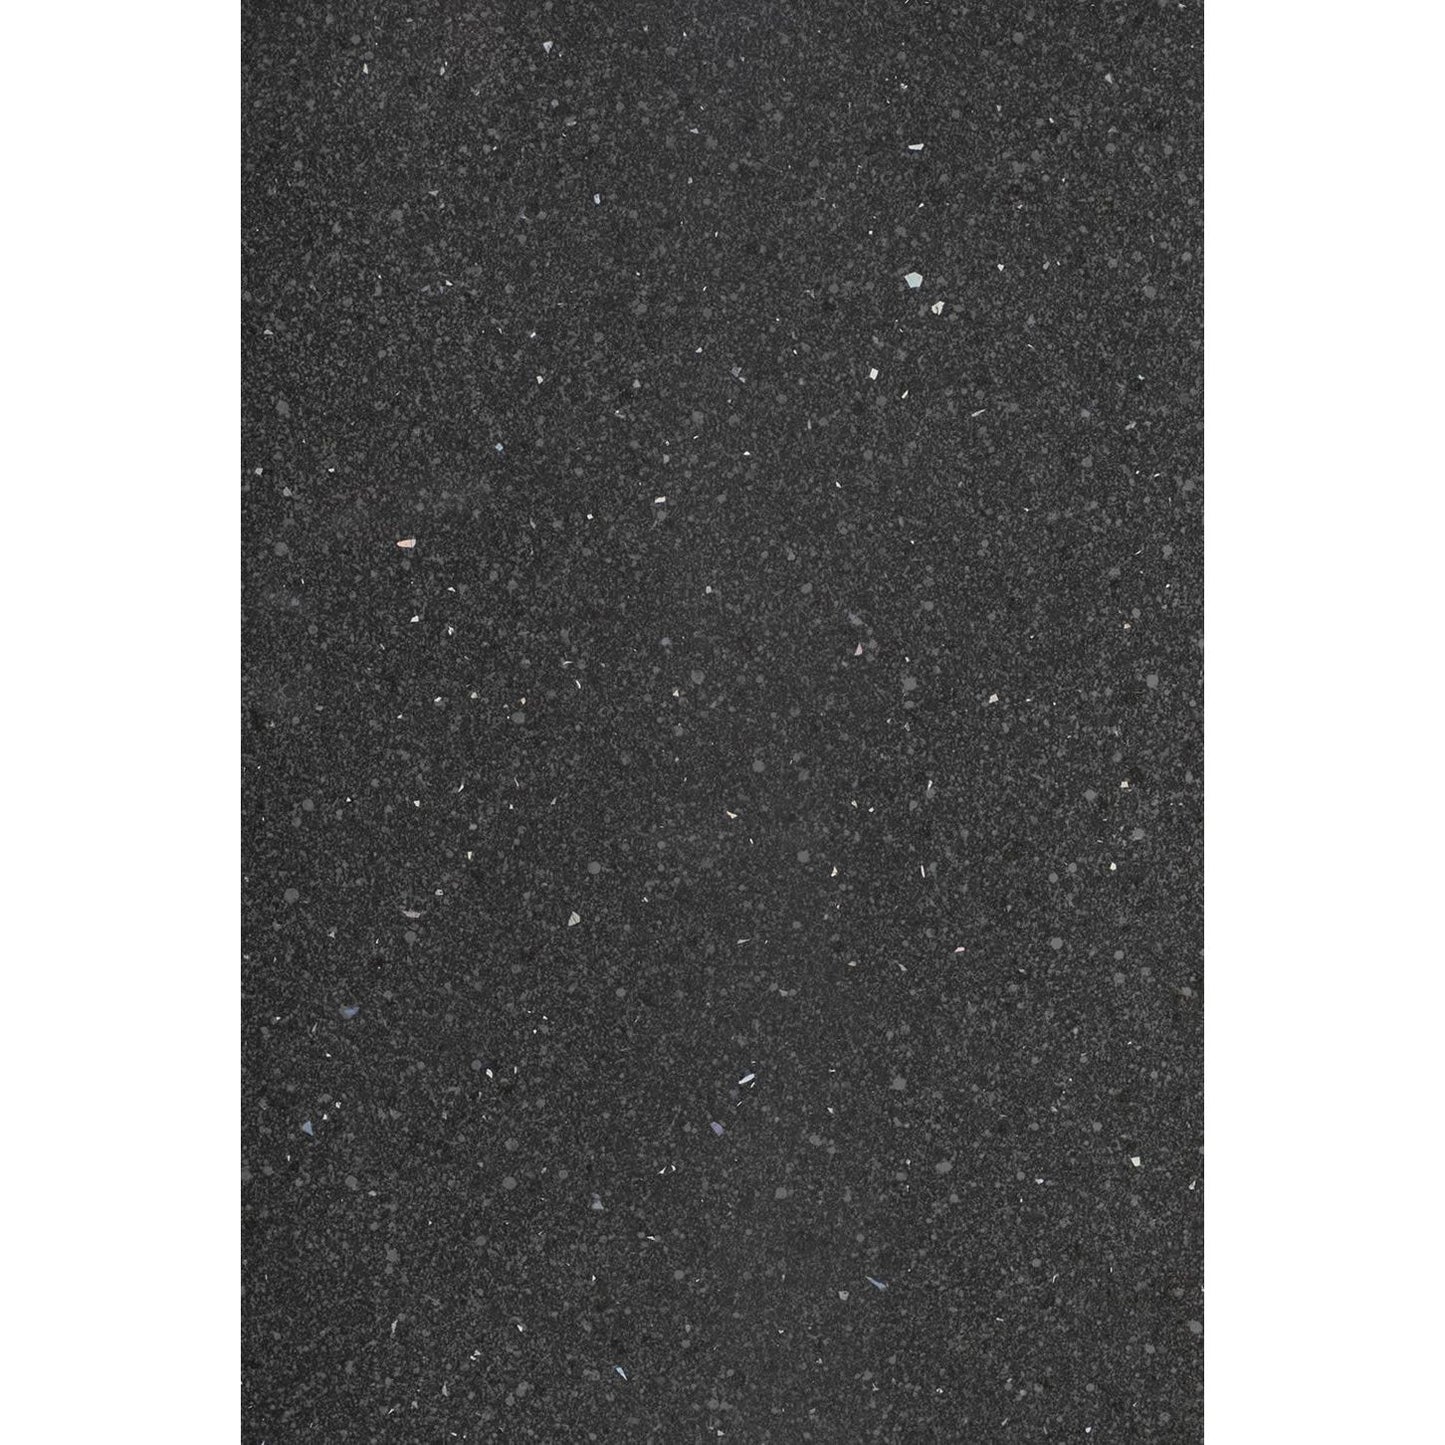 22mm New Andromeda Smoke Square Edge Worktops-Breakfast Bars-Upstands-Splashbacks